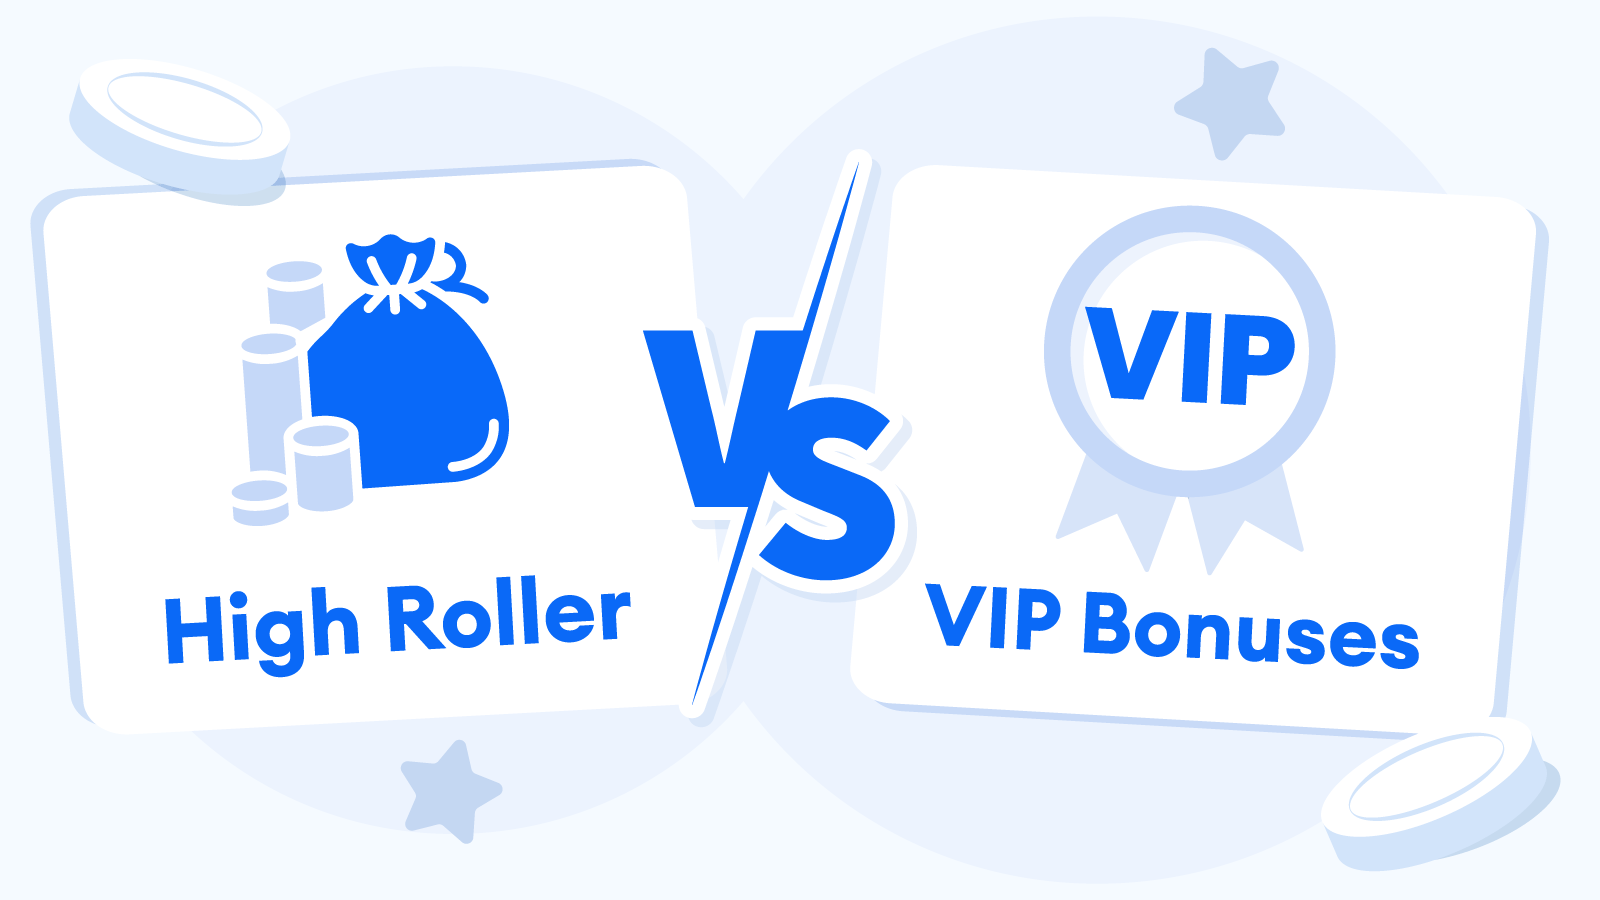 High Roller Bonuses vs. VIP Bonuses – What’s the difference